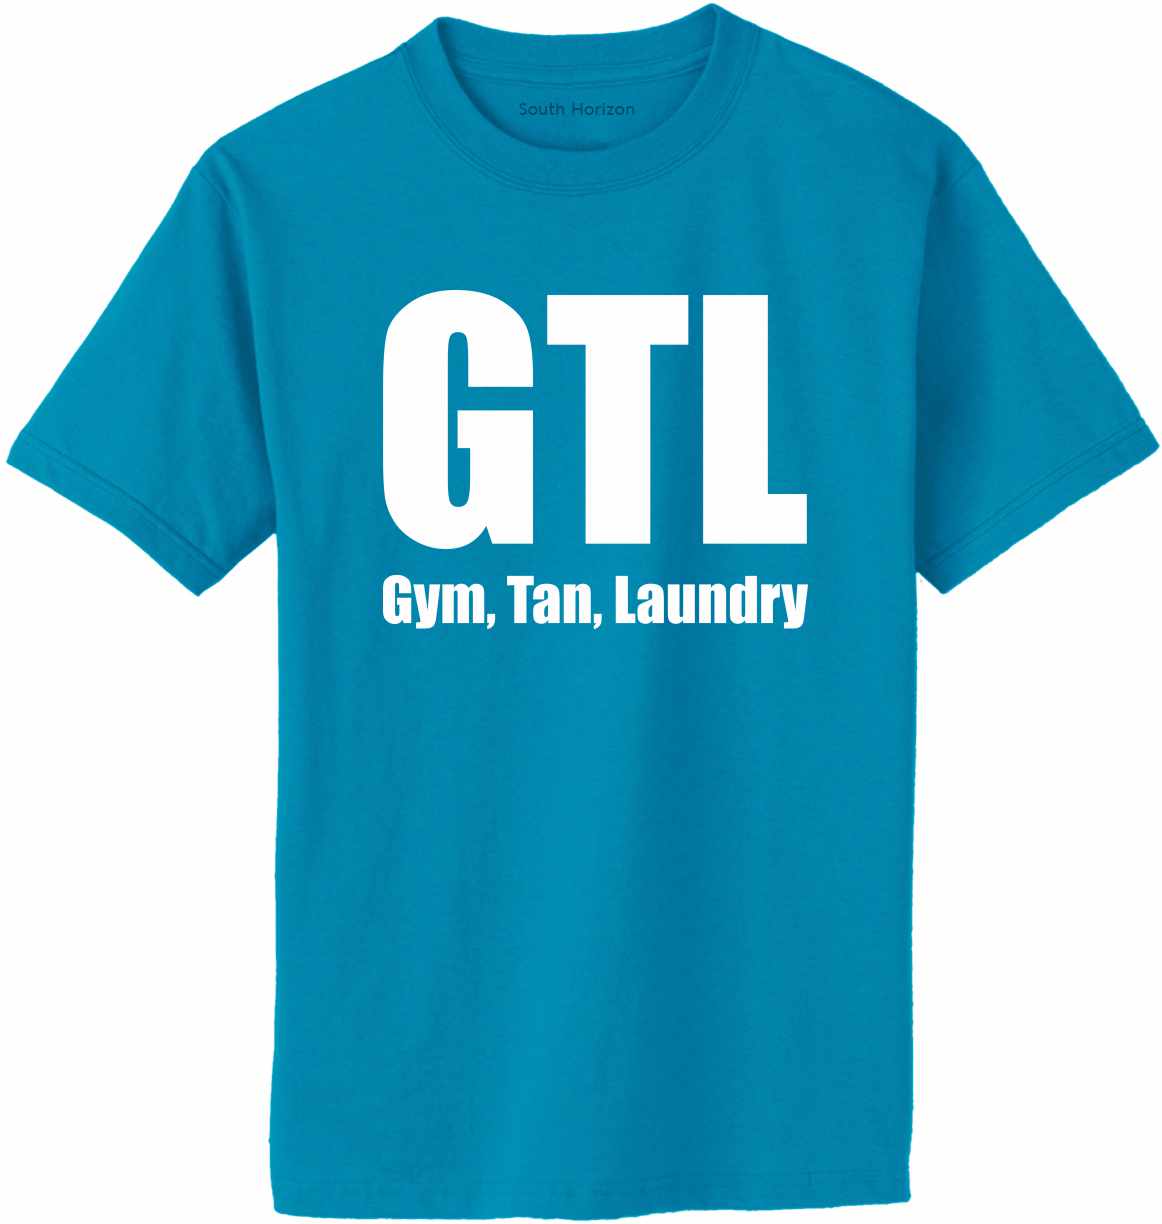 GTL Gym, Tan, Laundry Adult T-Shirt (#727-1)